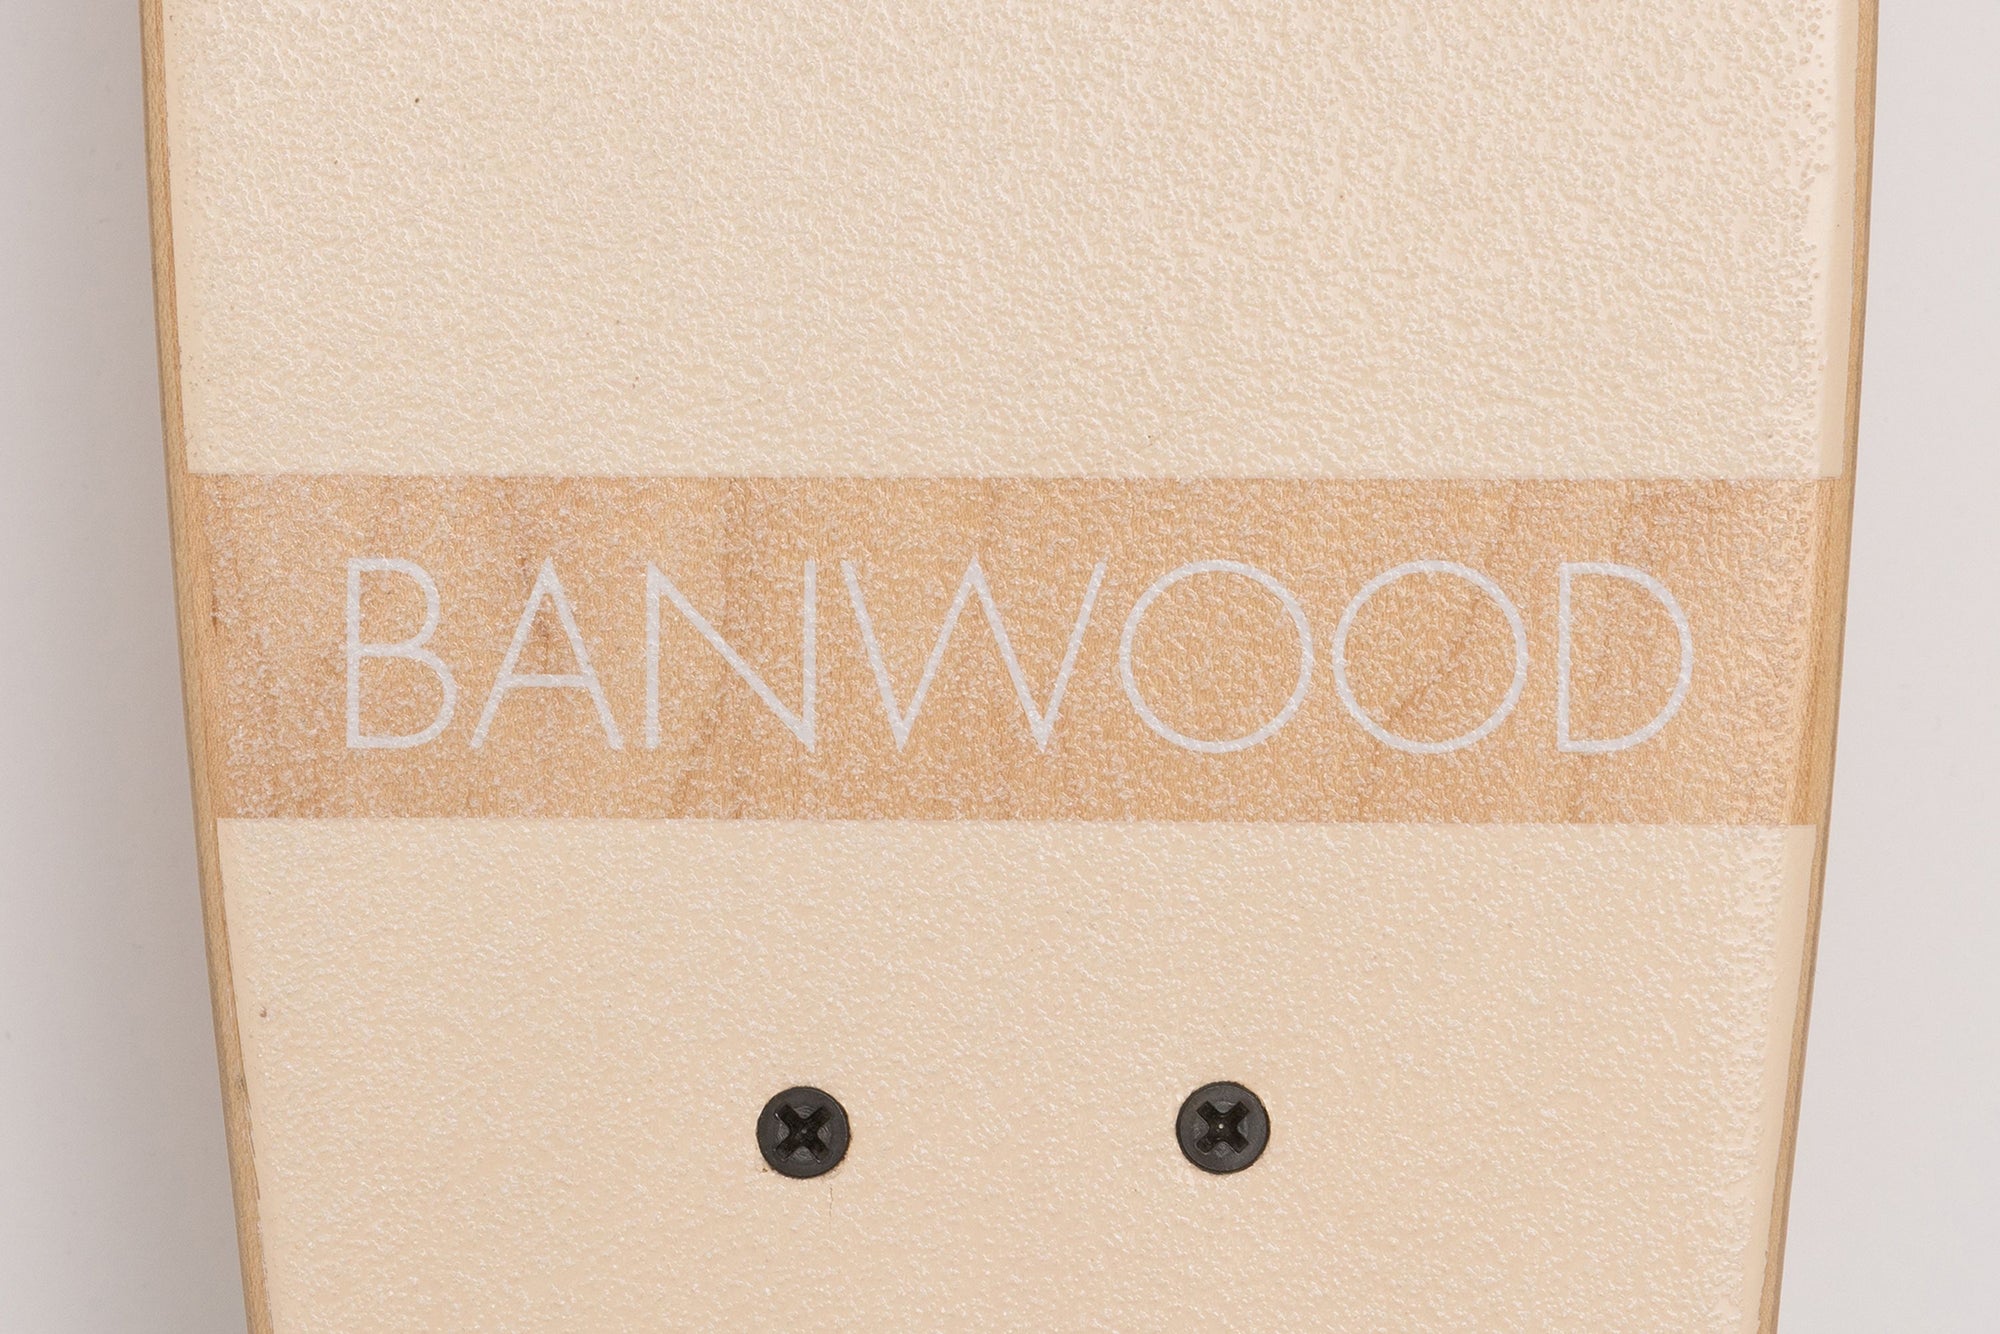 BANWOOD SKATEBOARD: CREAM